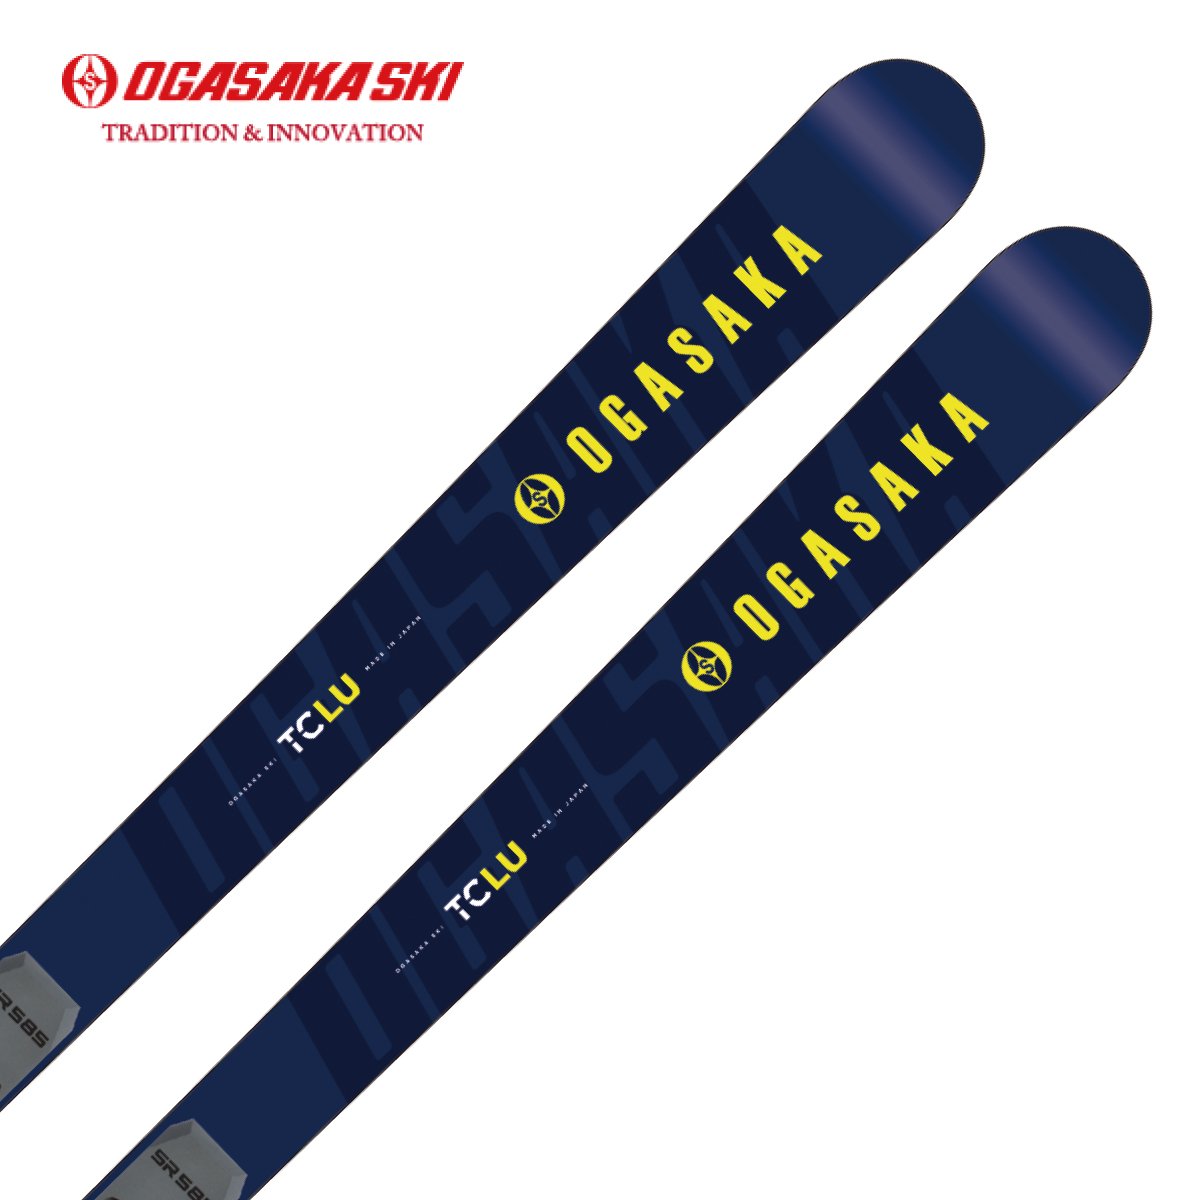 Skis - Ski Shop - Japanese Brand Ski Gear and Skiwear Top 